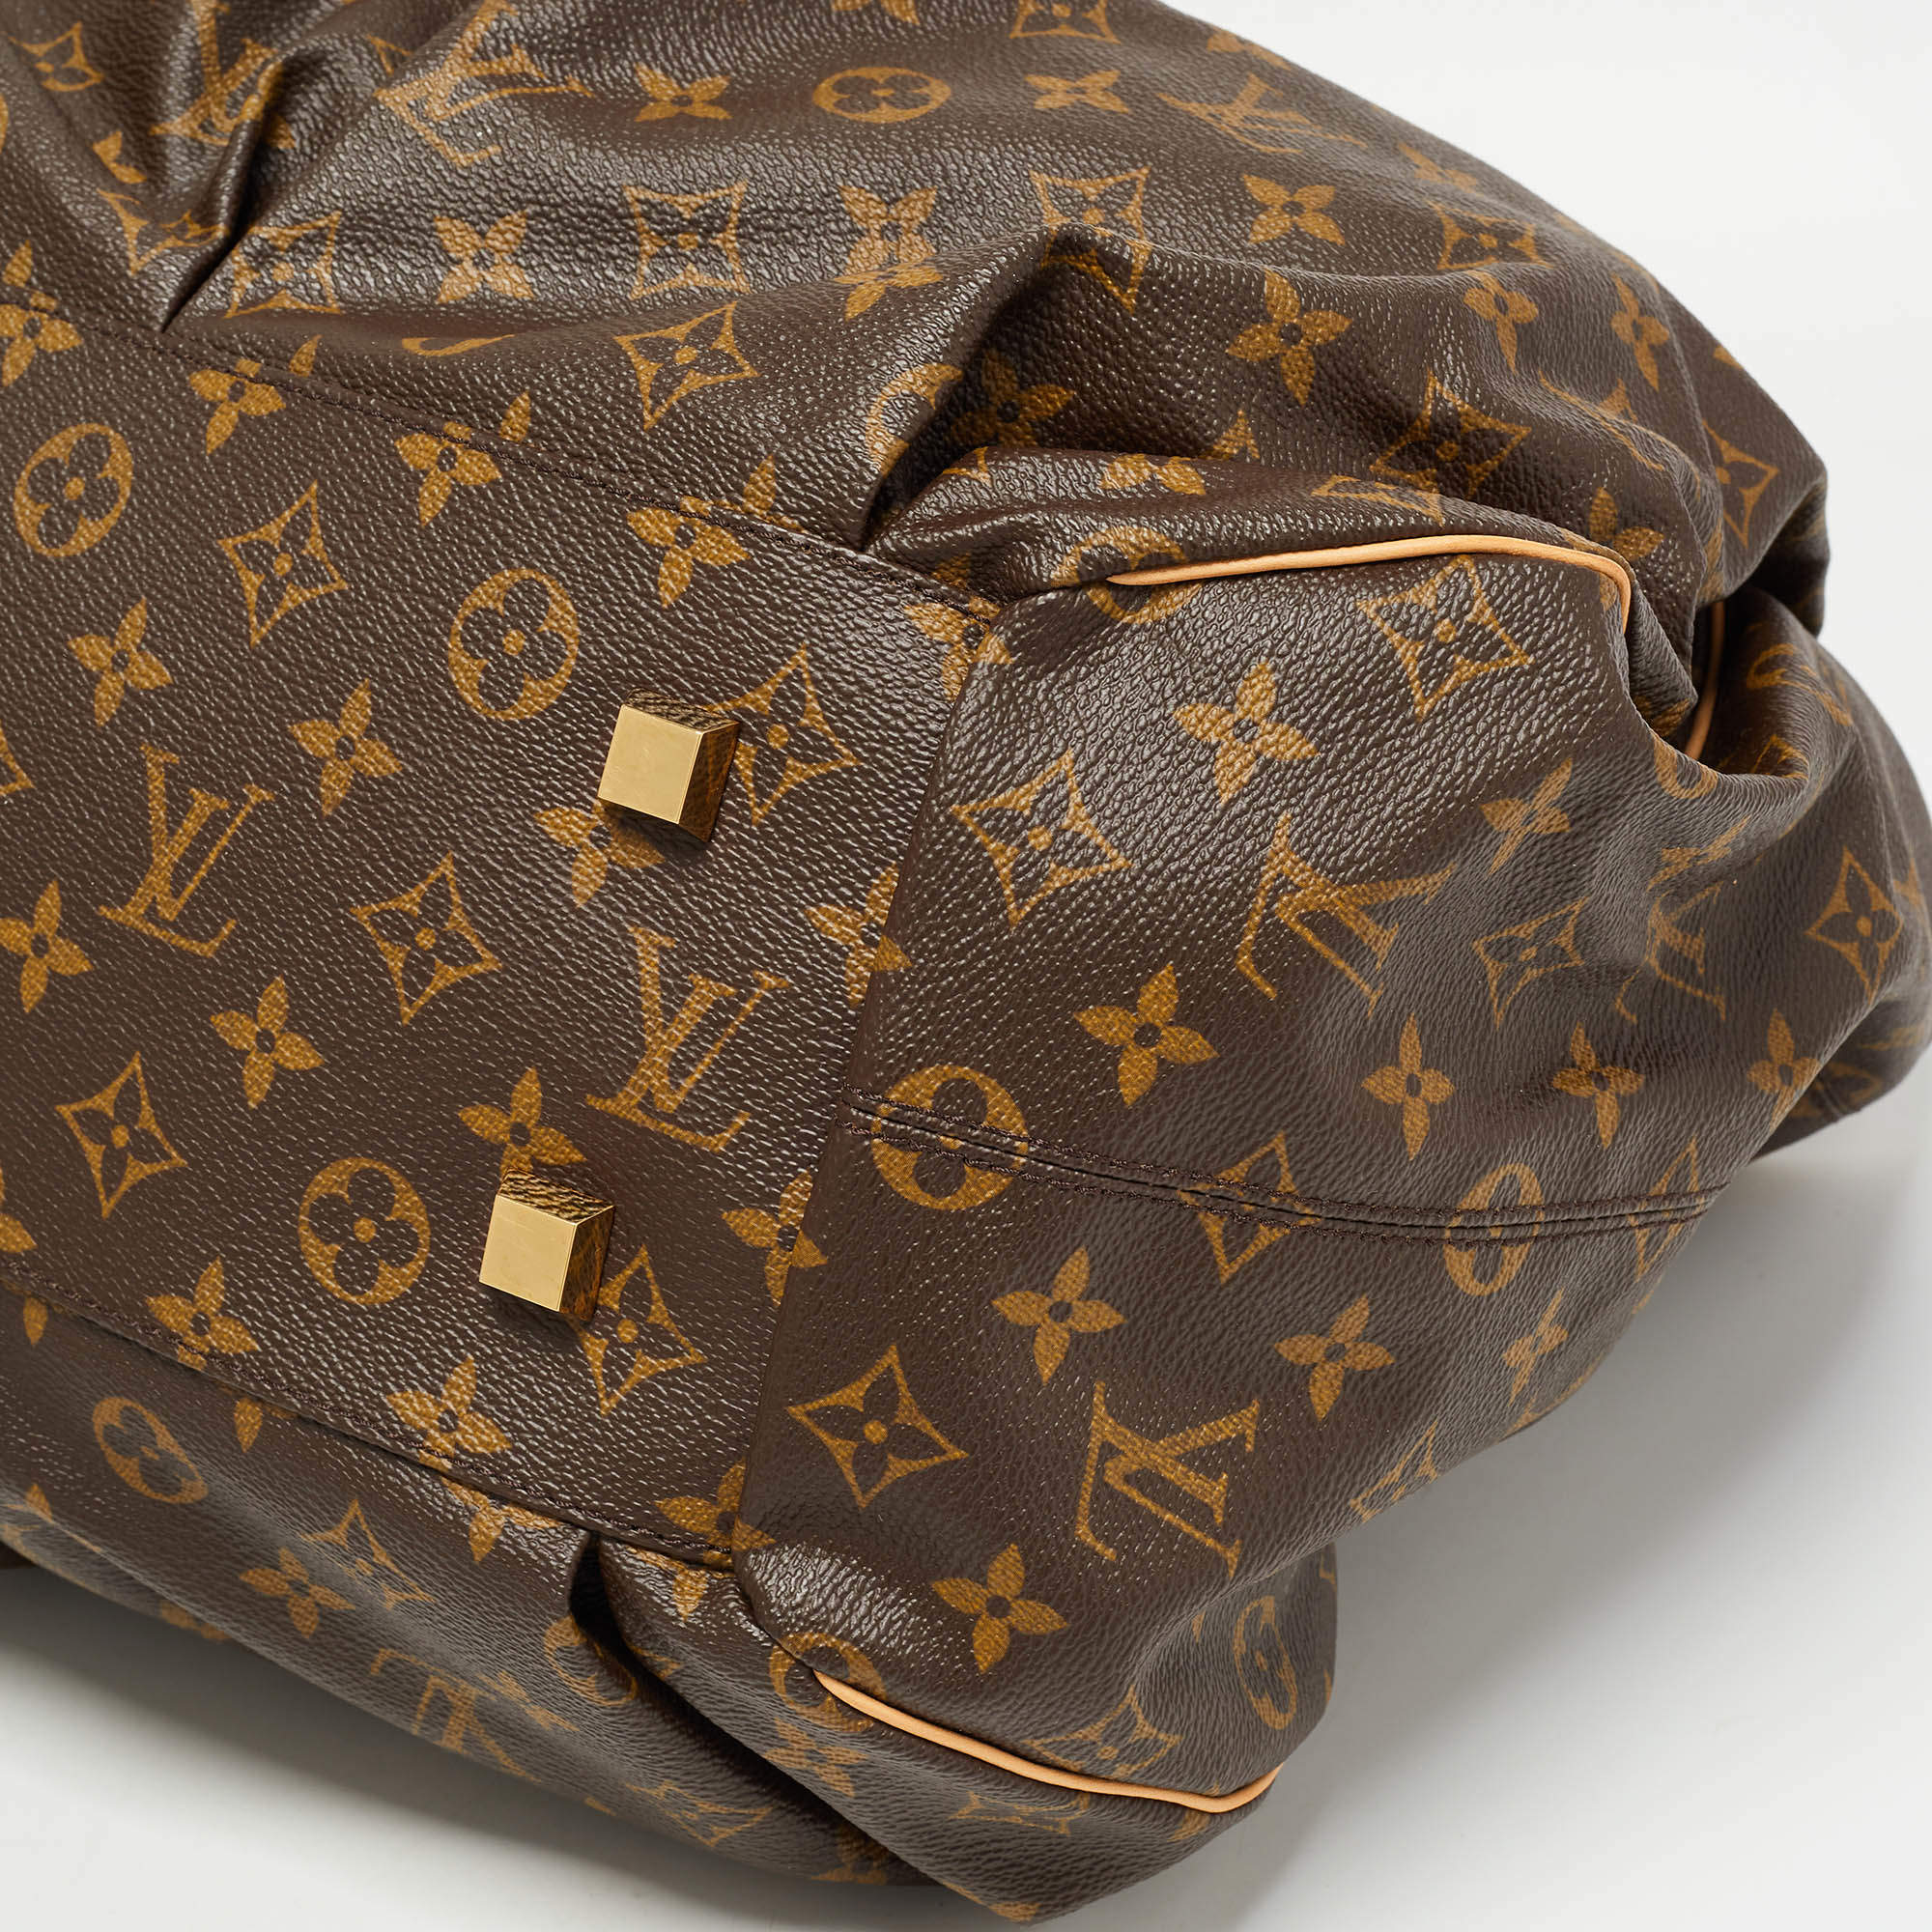 Louis Vuitton Irene Bag - Prestige Online Store - Luxury Items